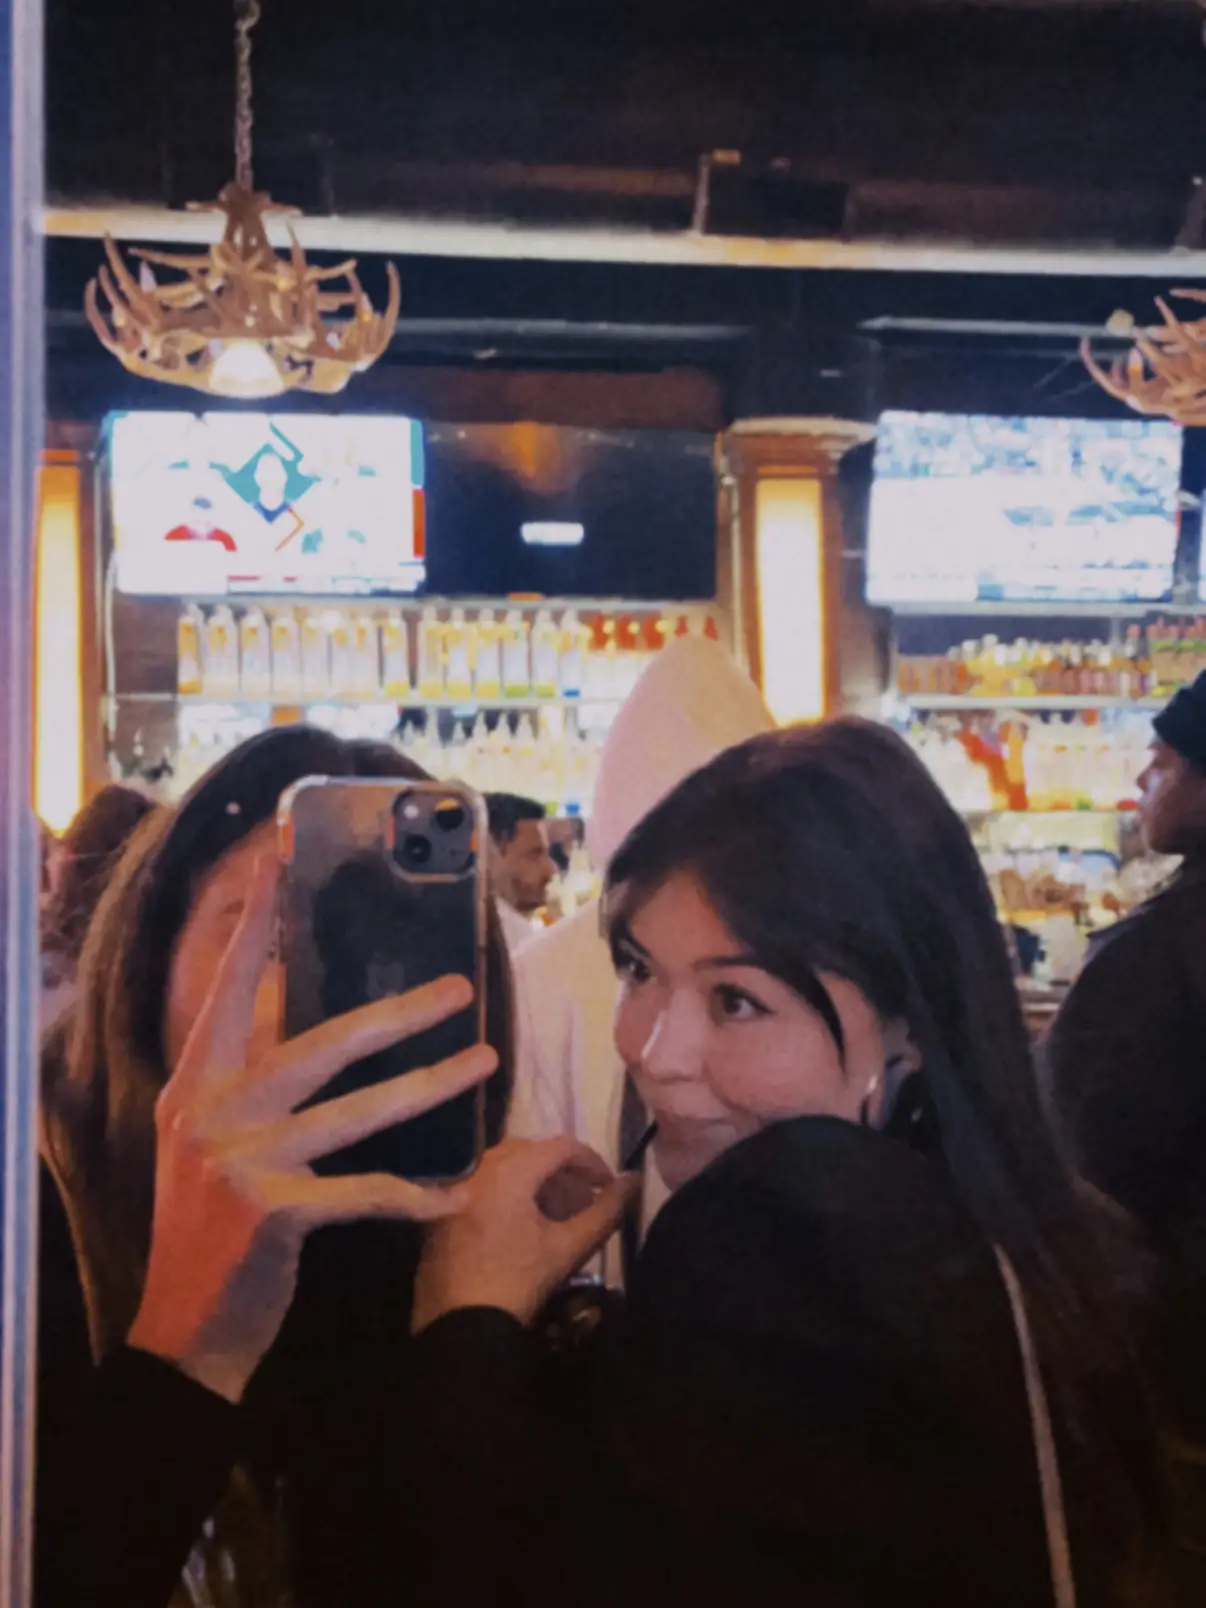  A woman taking a selfie in a bar.